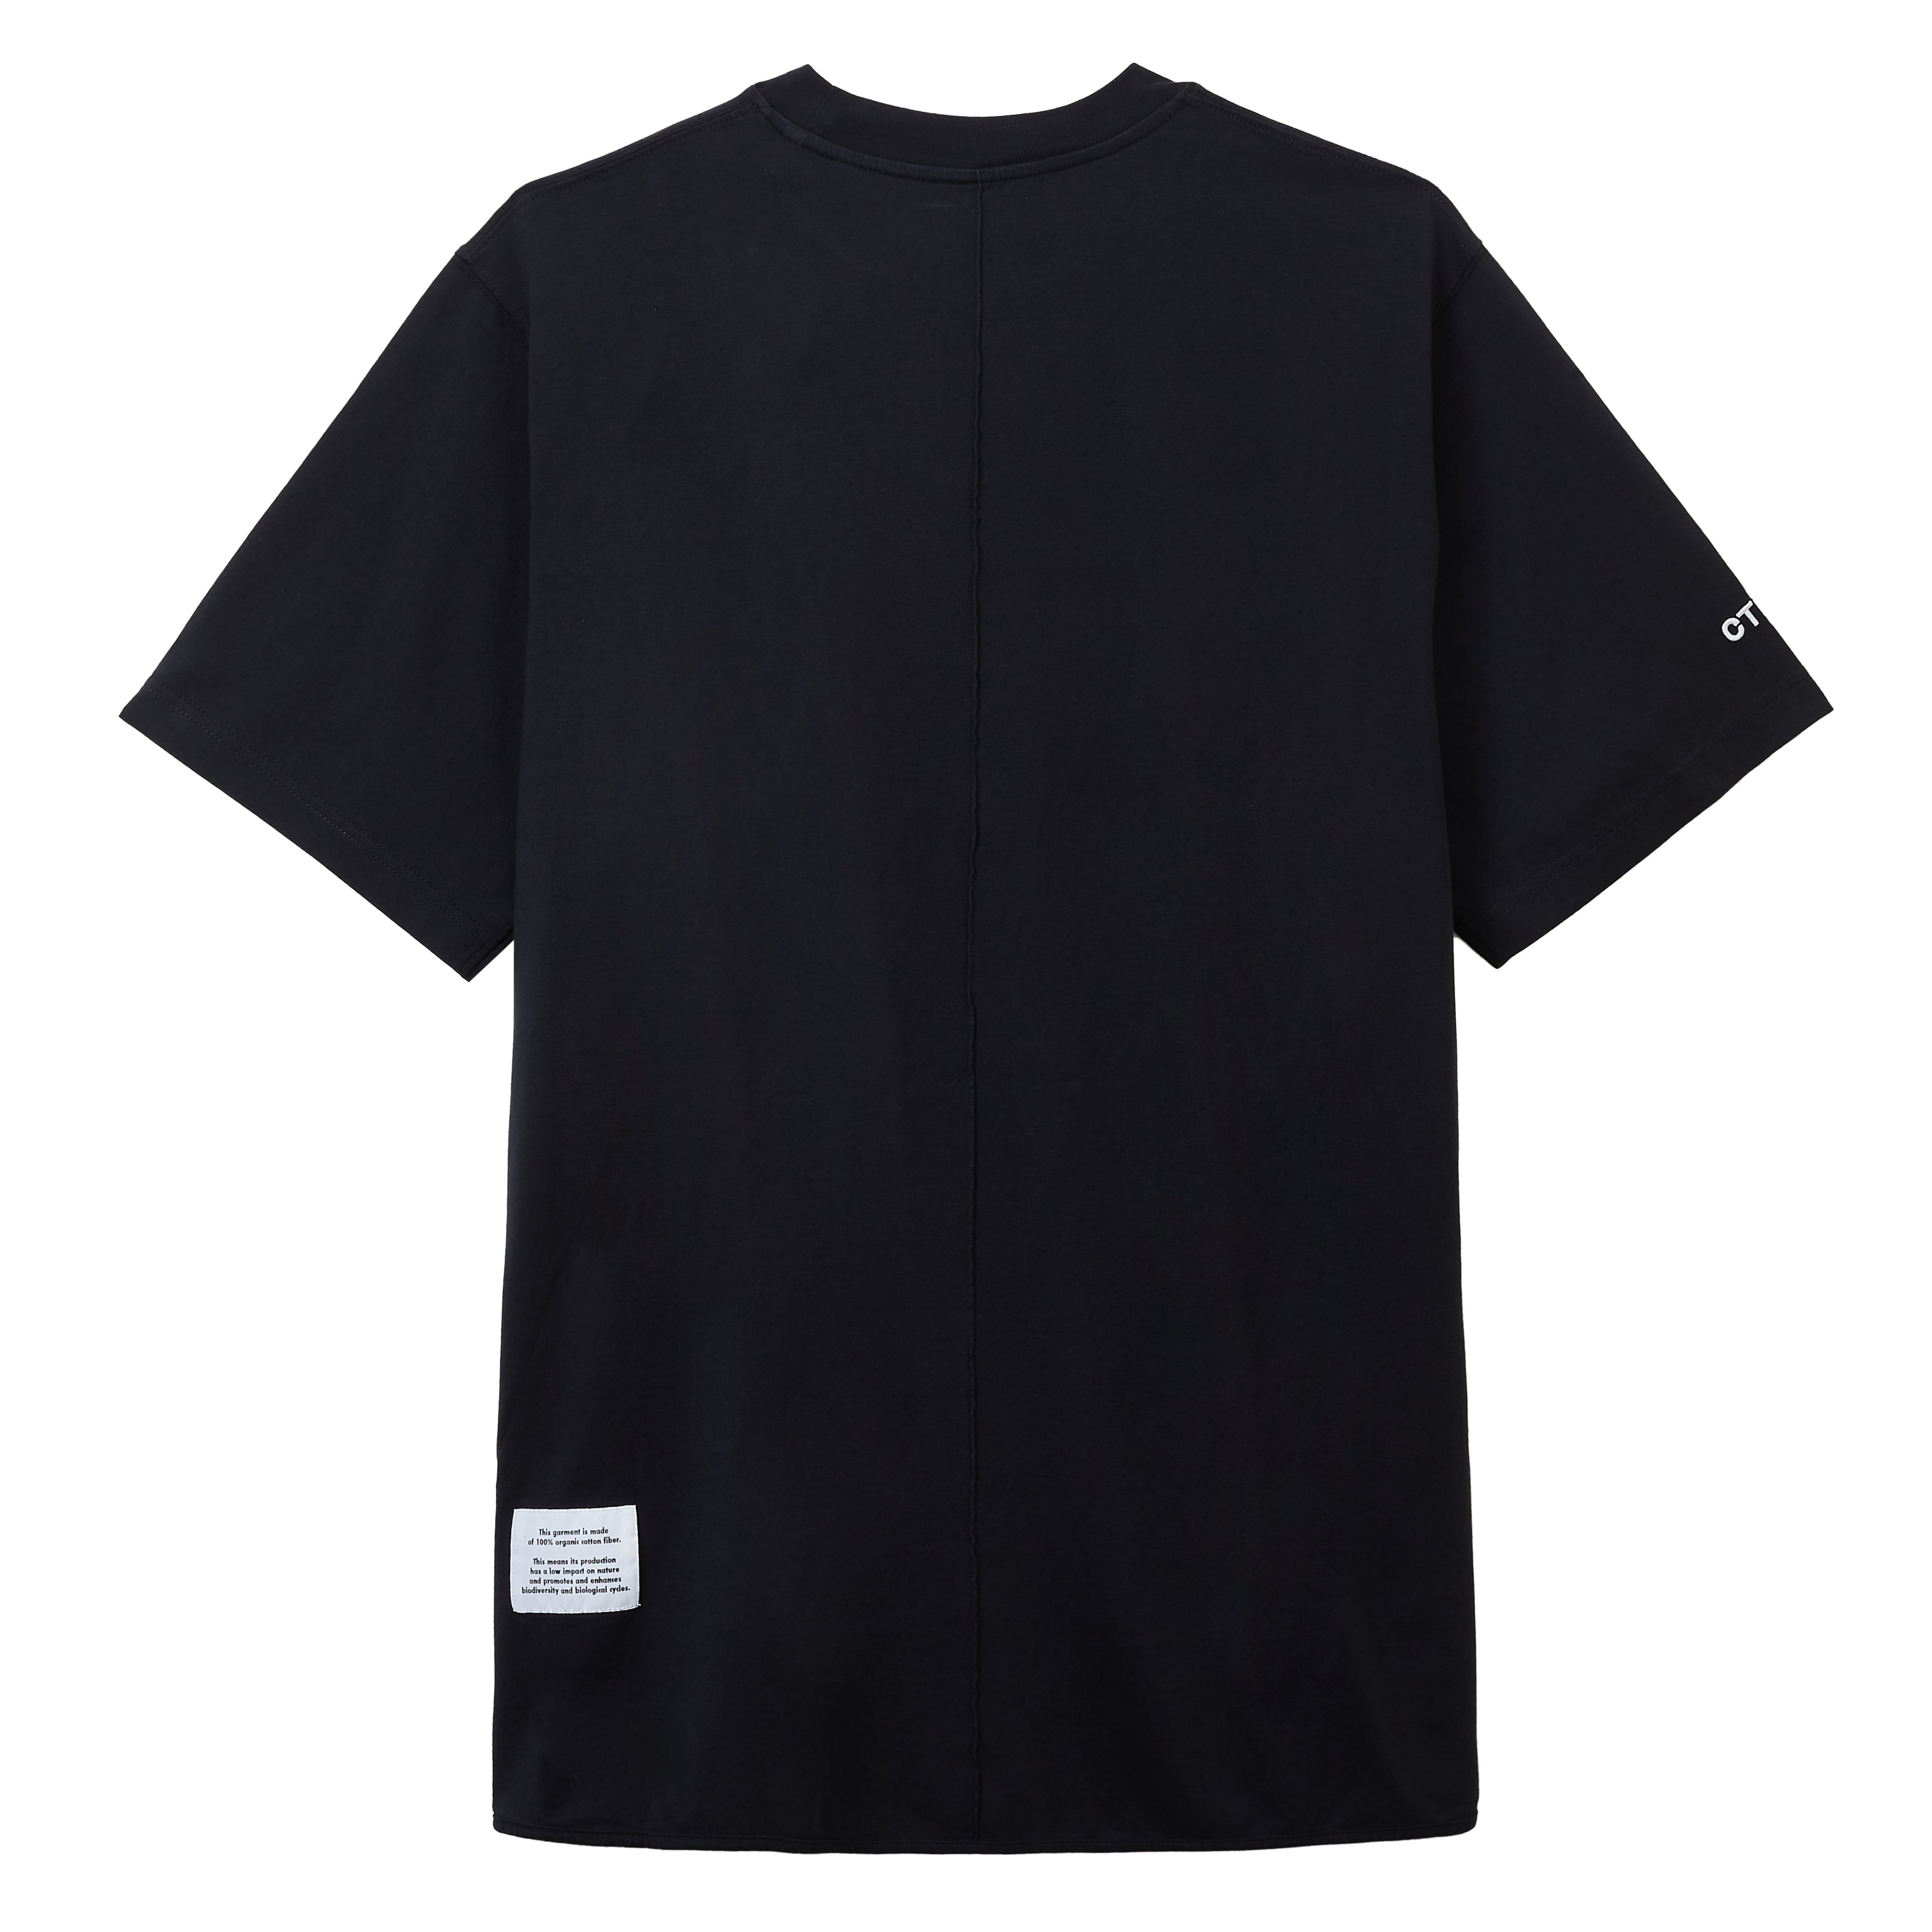 HERON PRESTON T-Shirt Over Heron Colors Black Multi | Isetan KL Online Store